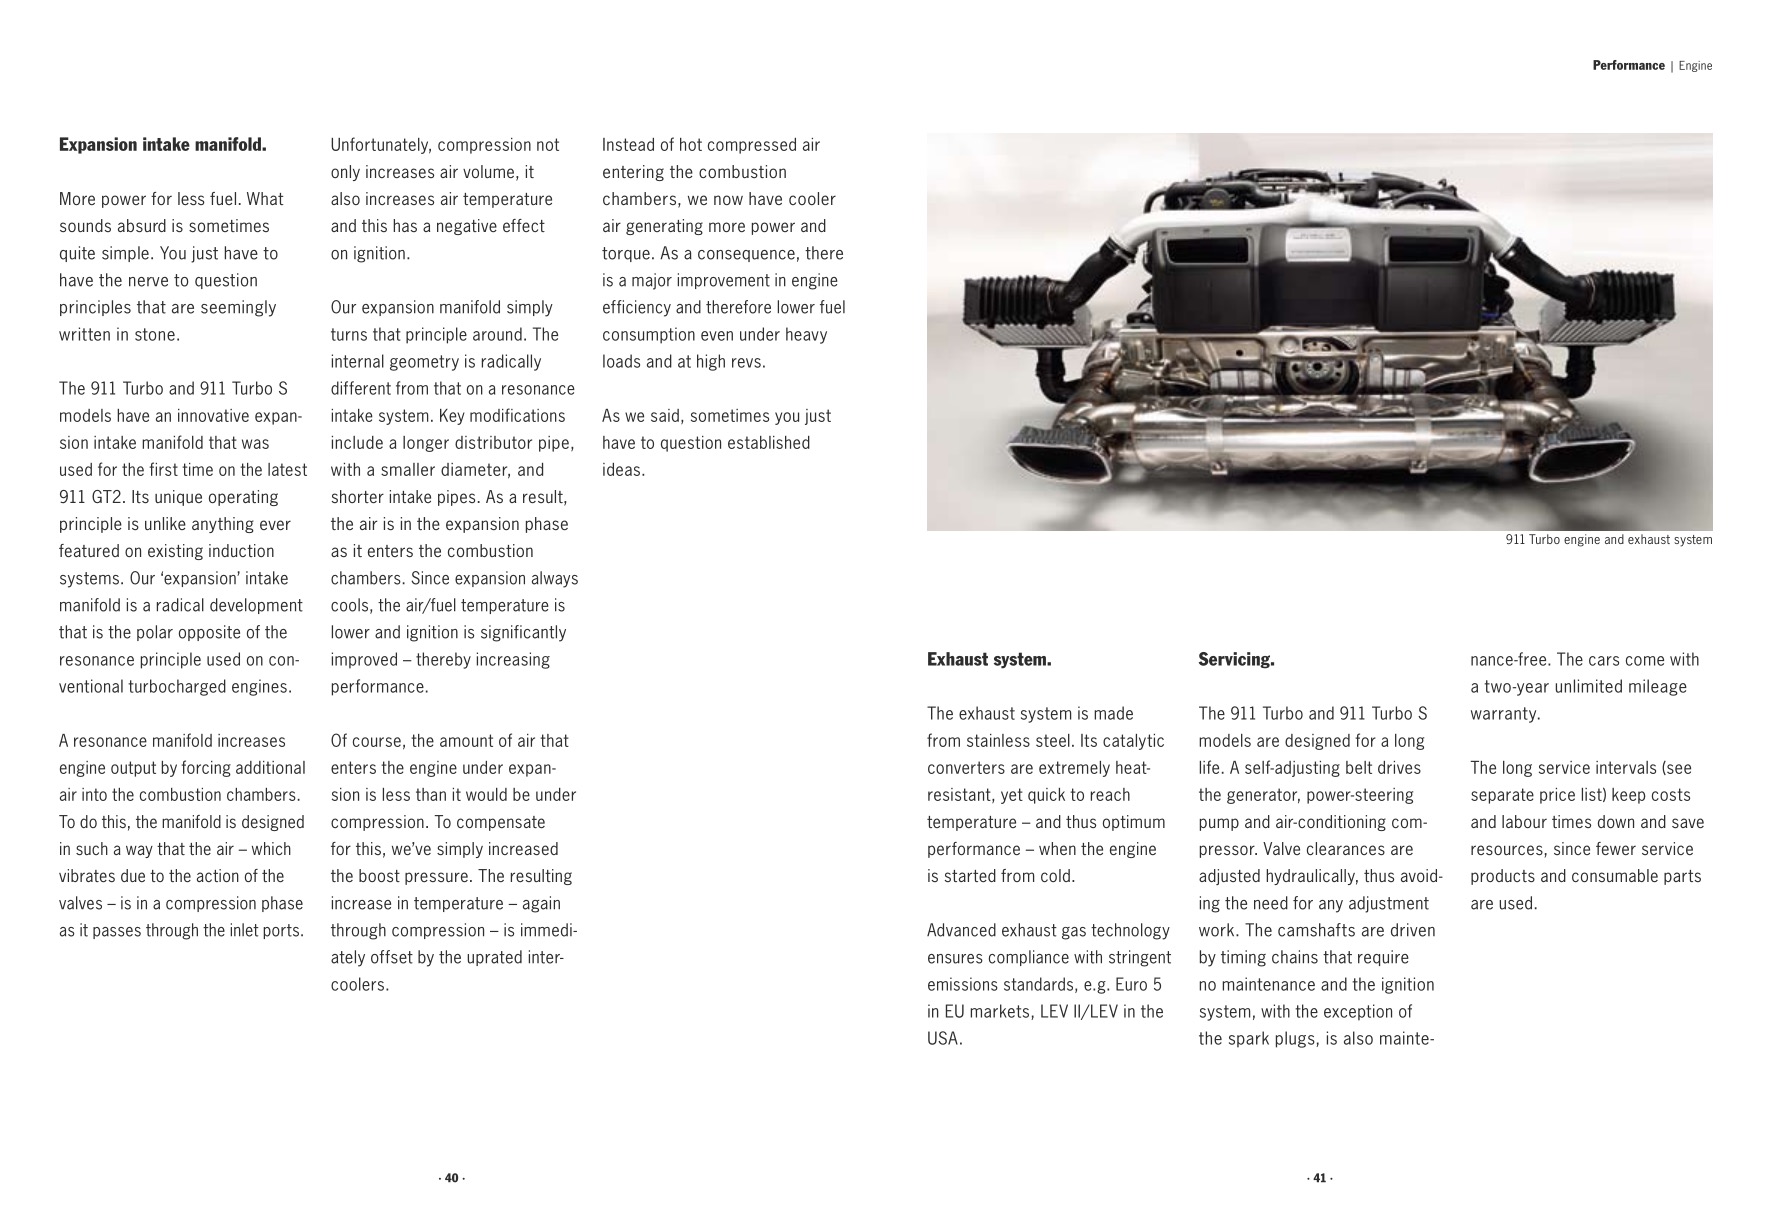 2010 Porsche 911 Turbo Brochure Page 5